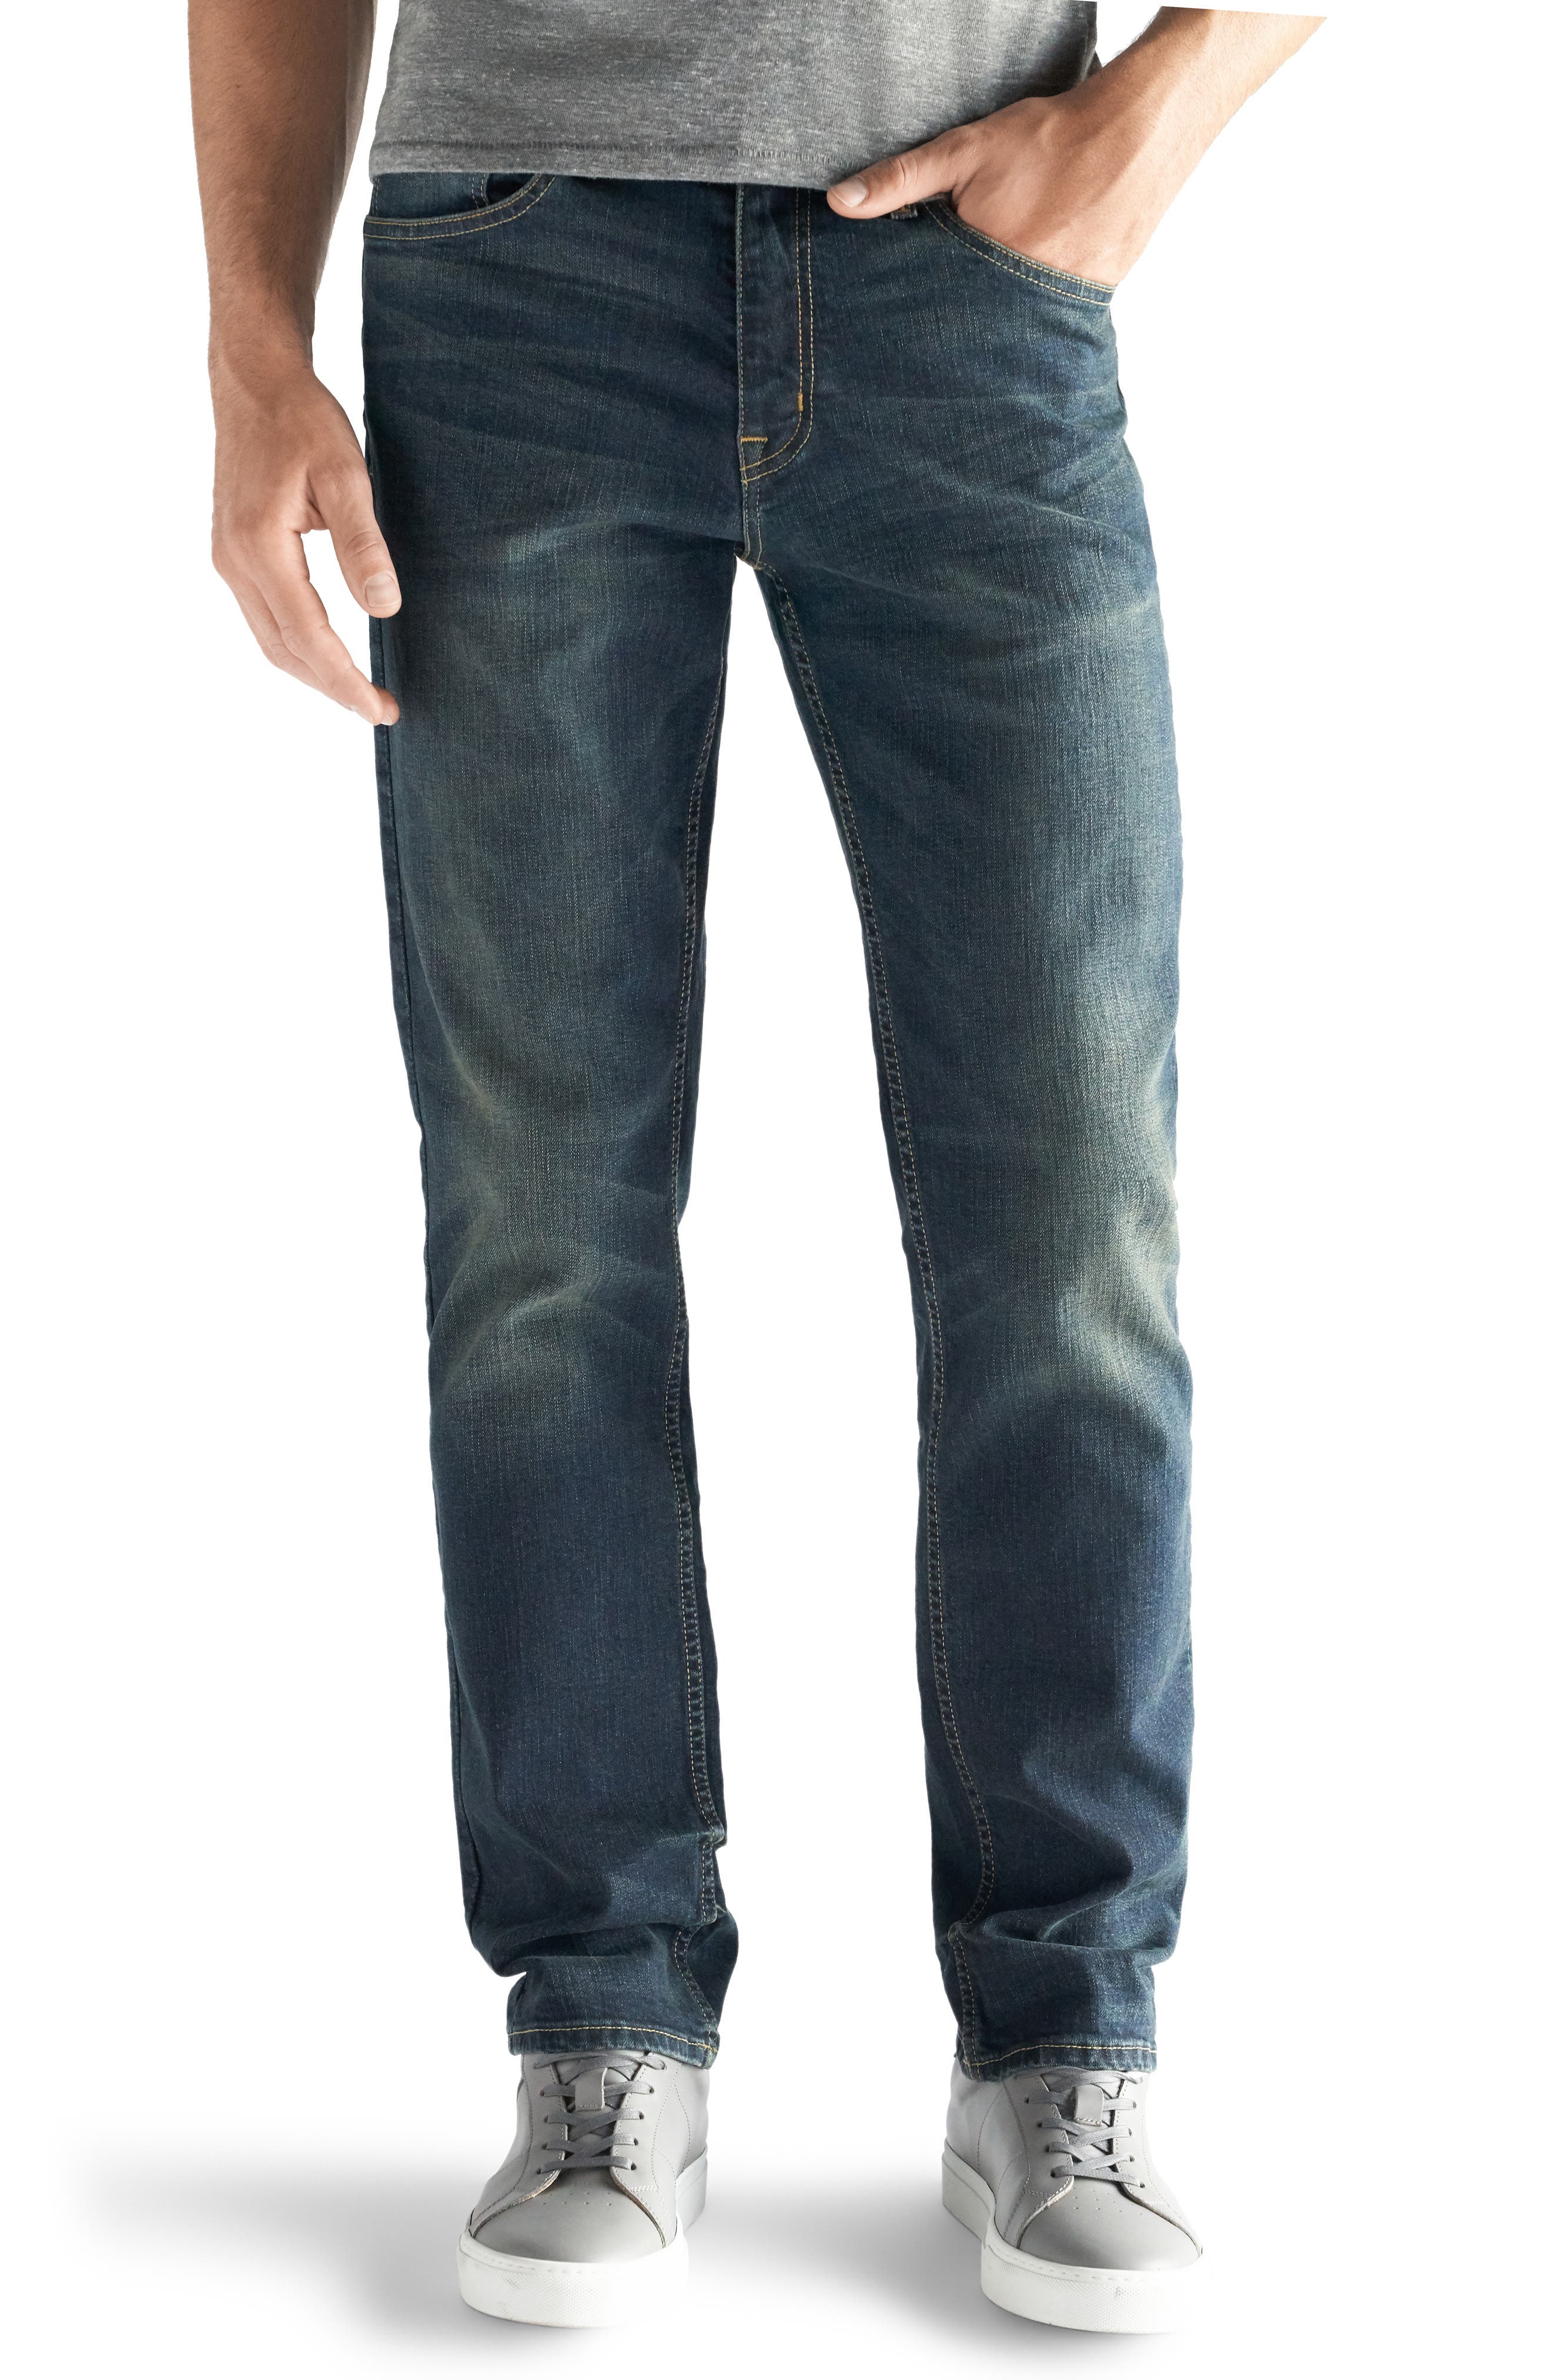 nordstrom stretch jeans